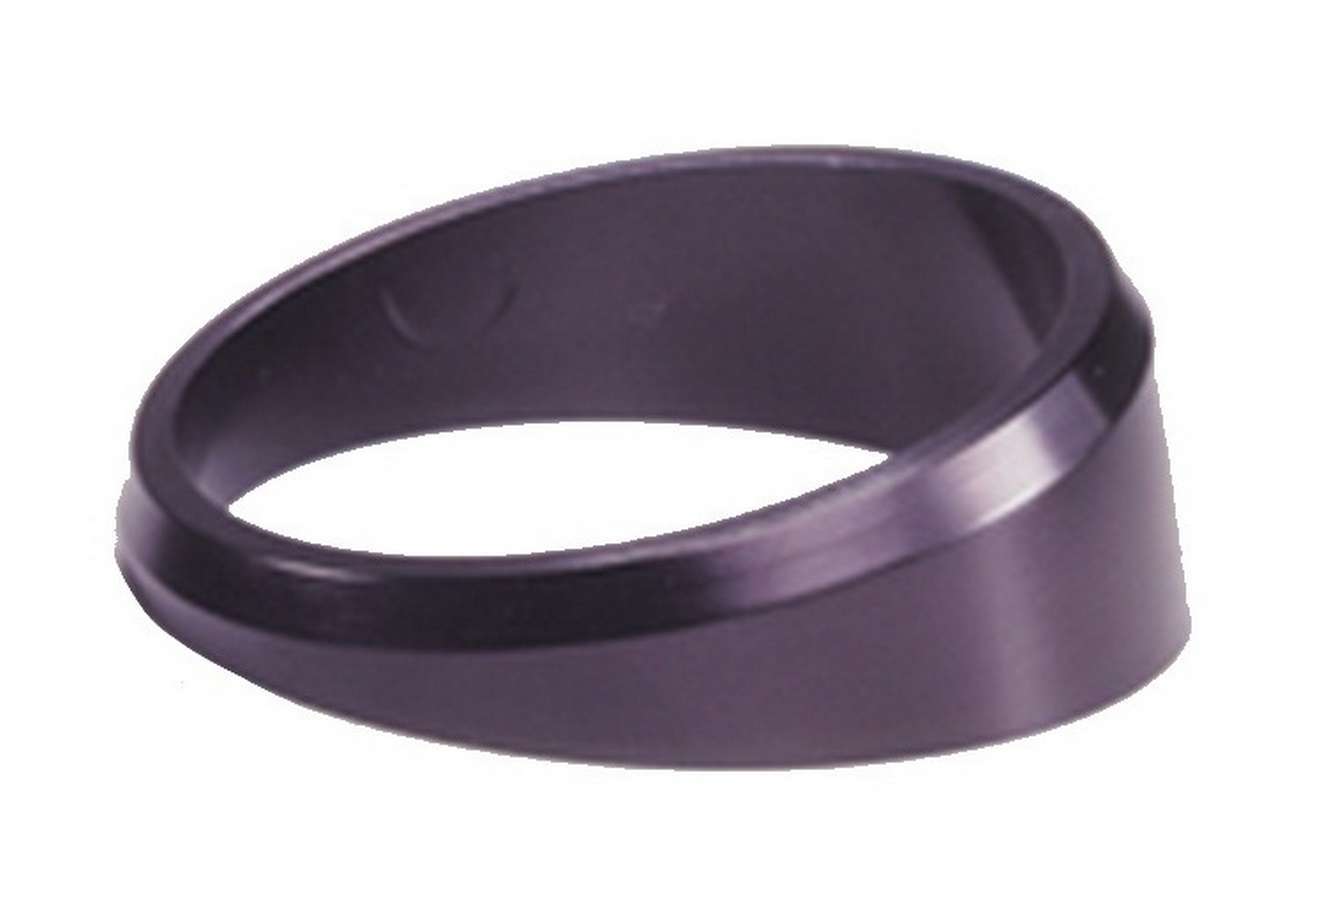 Auto Meter Gauge Angle Ring, 2-5/8" Gauges, Plastic, Black, Set of 3